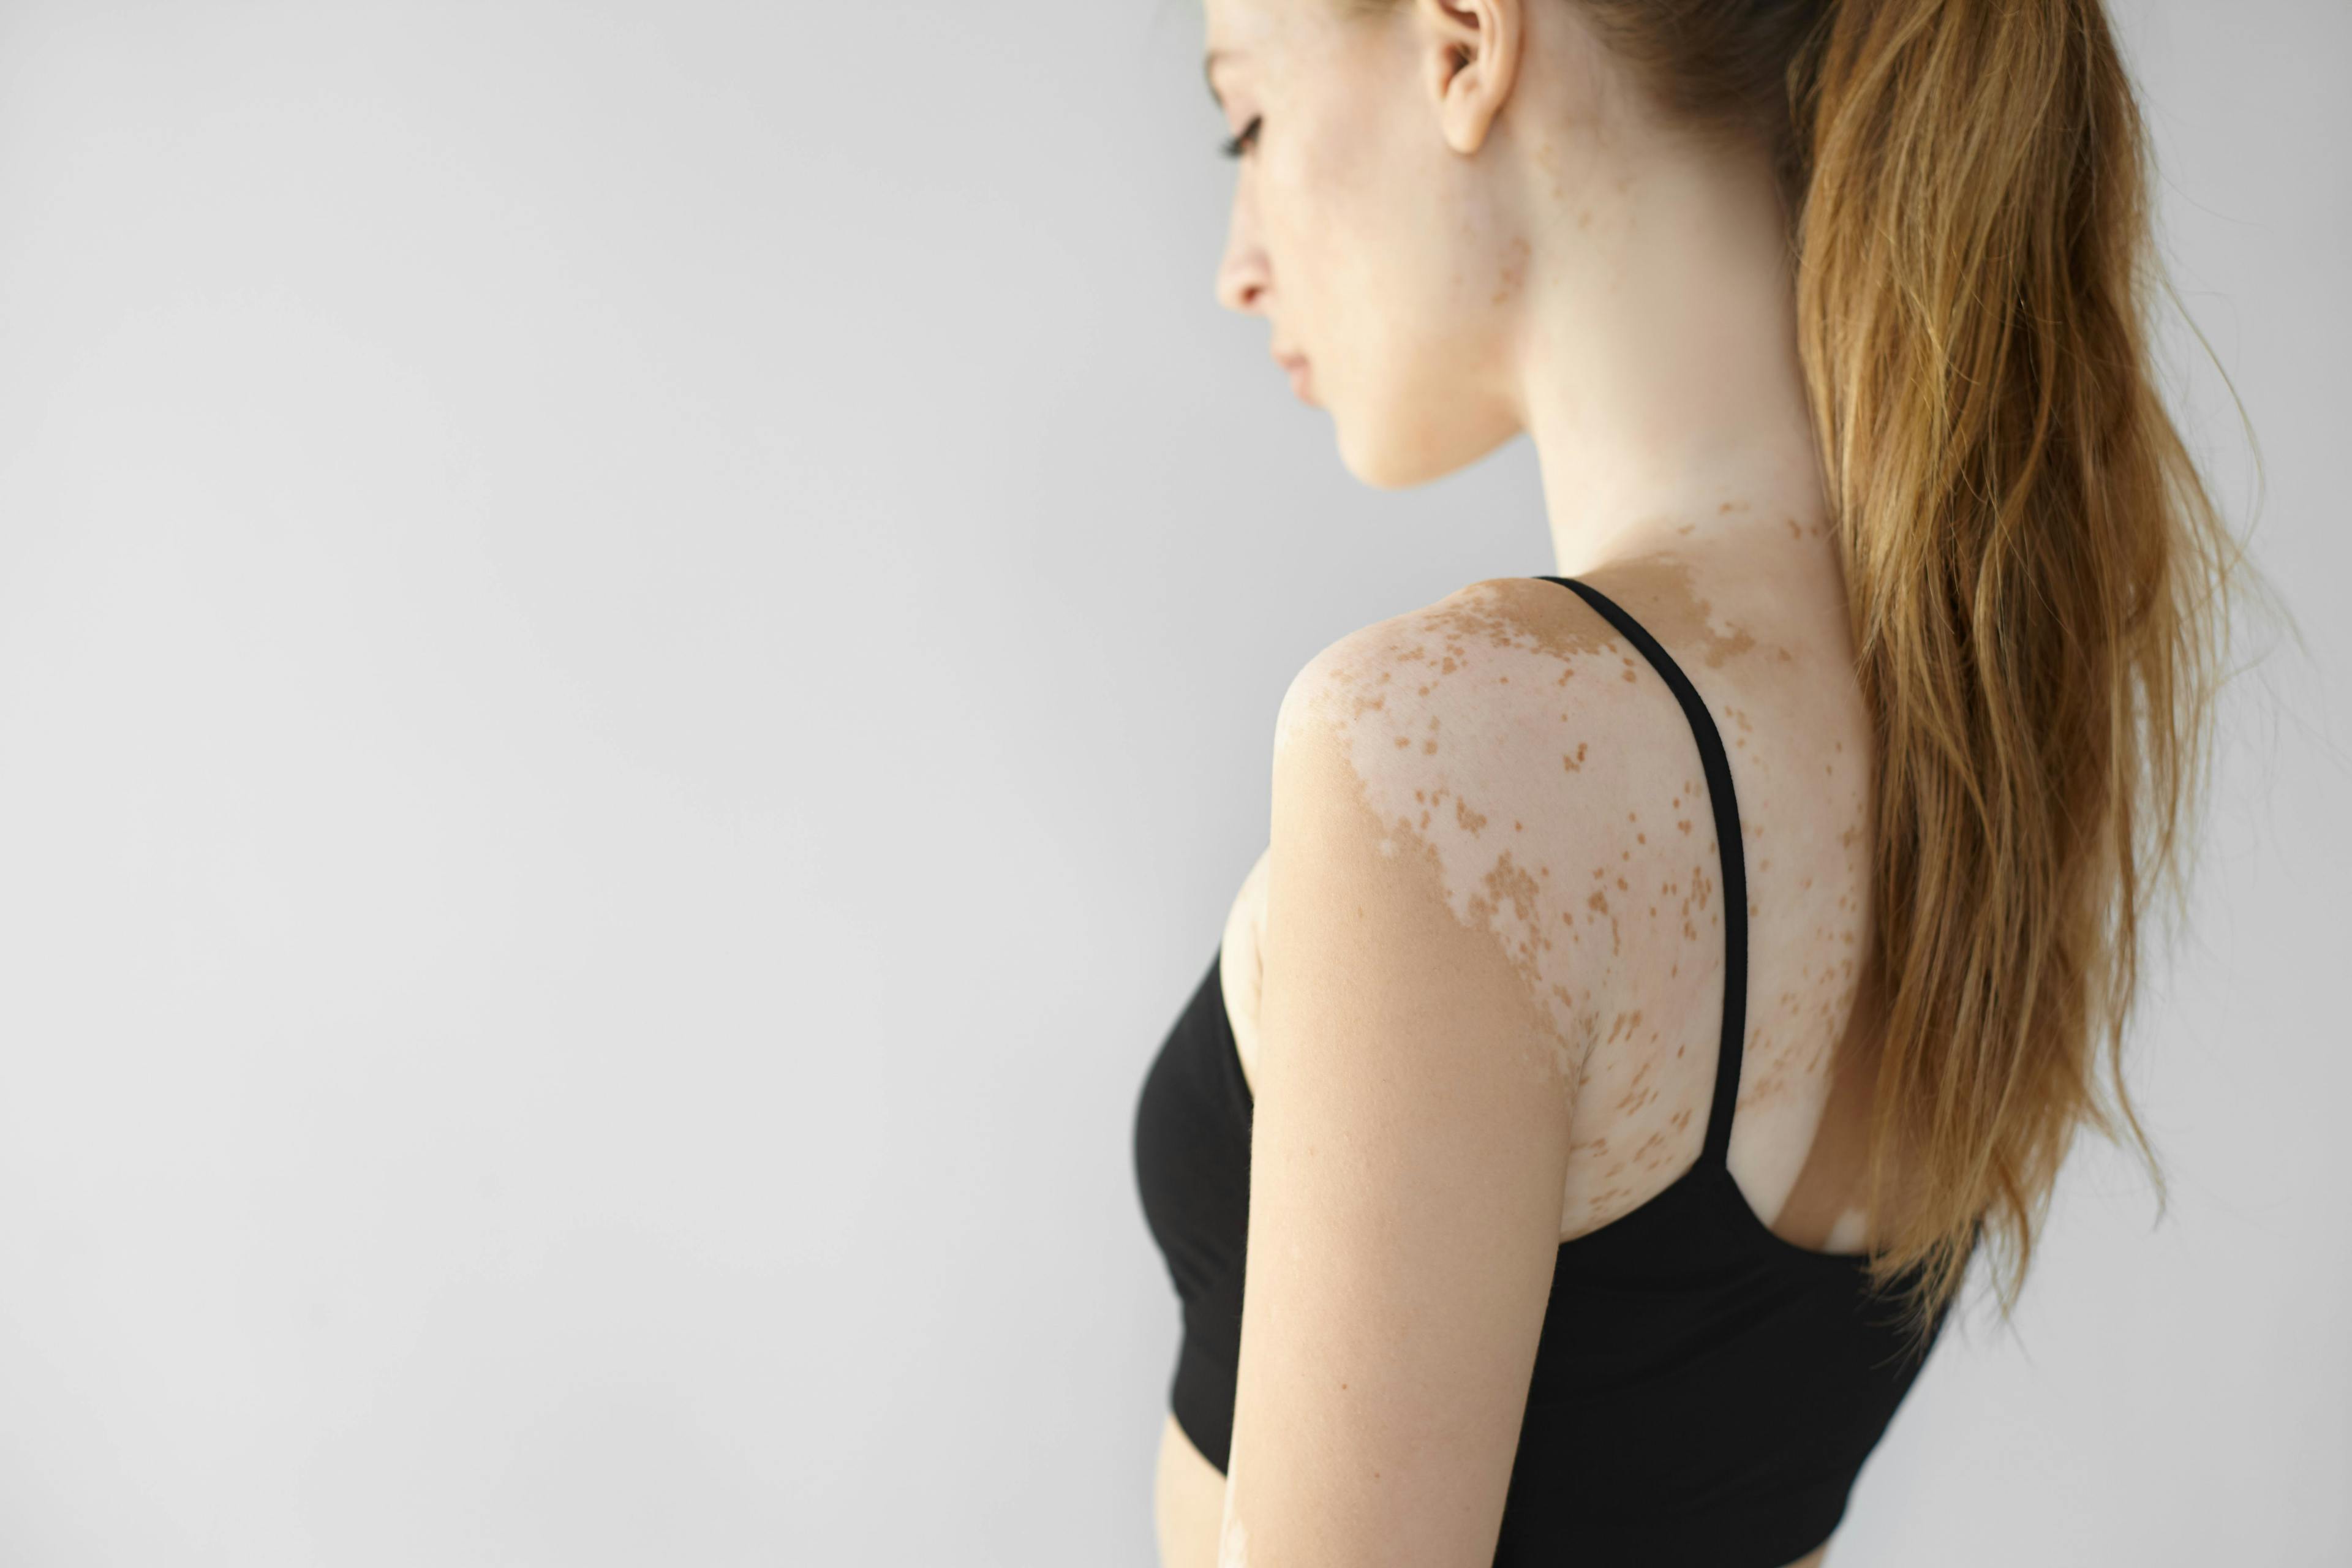 Patient with vitiligo | Image Credit: © shurkin_son - stock.adobe.com